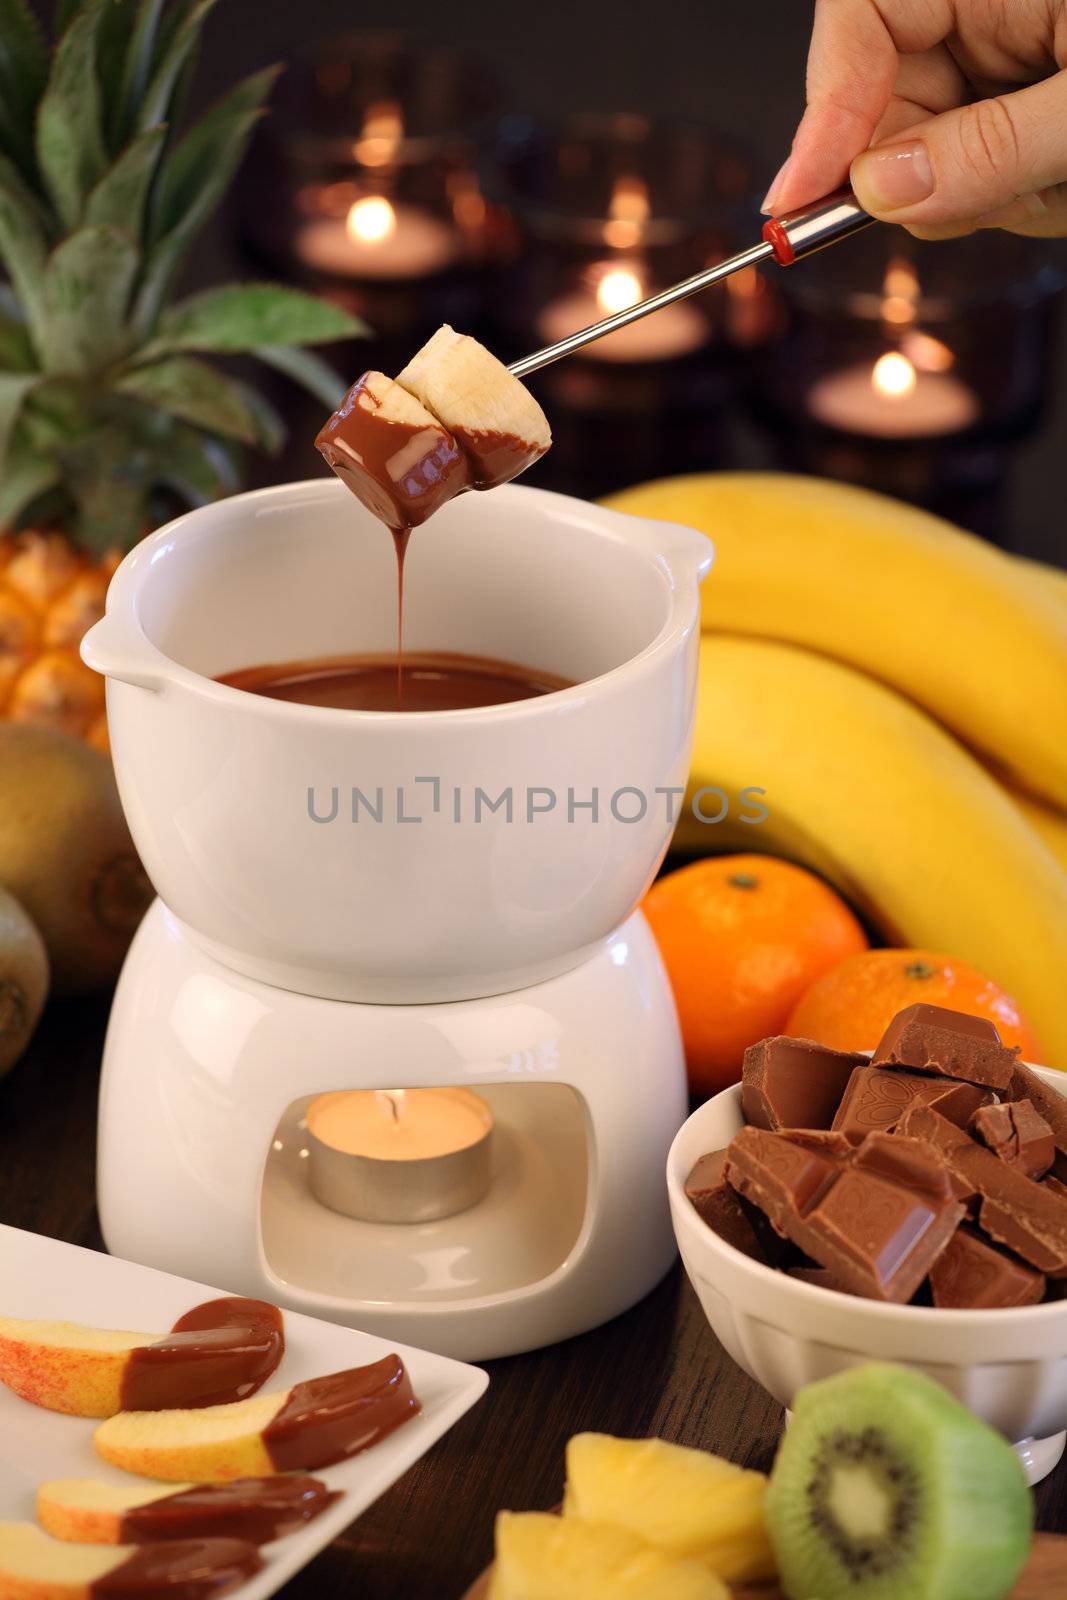 Chocolate fondue by sumners